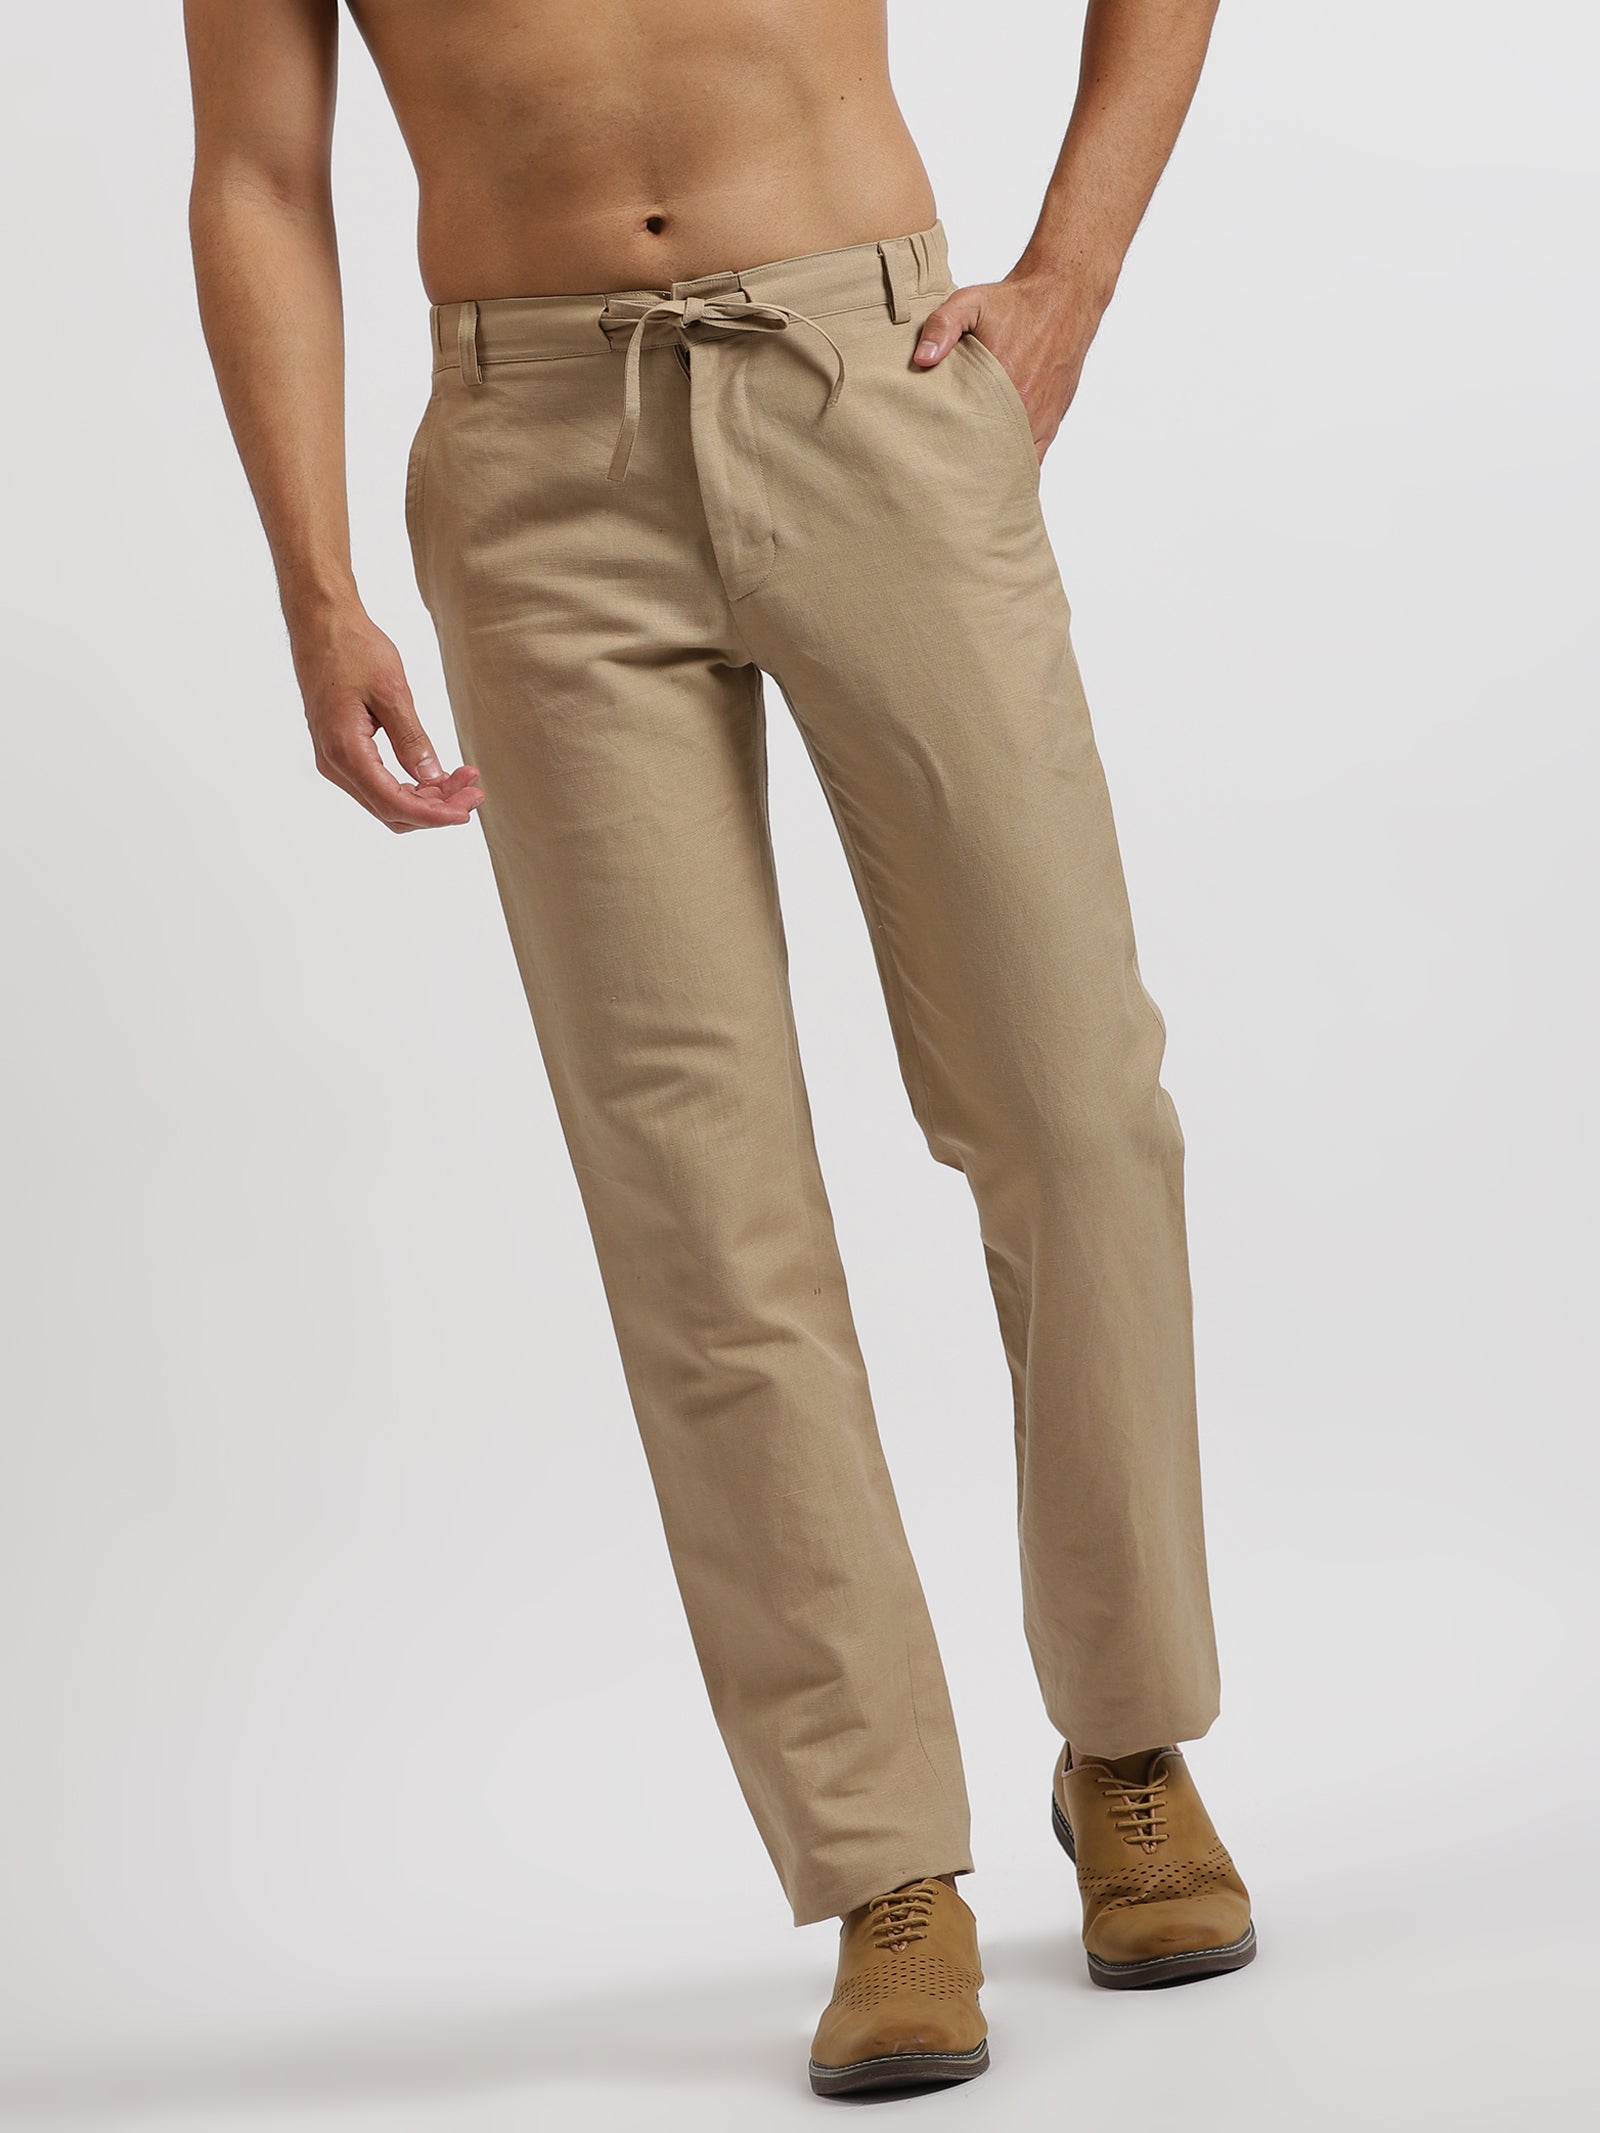 Men's Ultralight Cargo Pants: Hiking & Travel Pant For Men - Versatac  Ultralight Pant | RailRiders